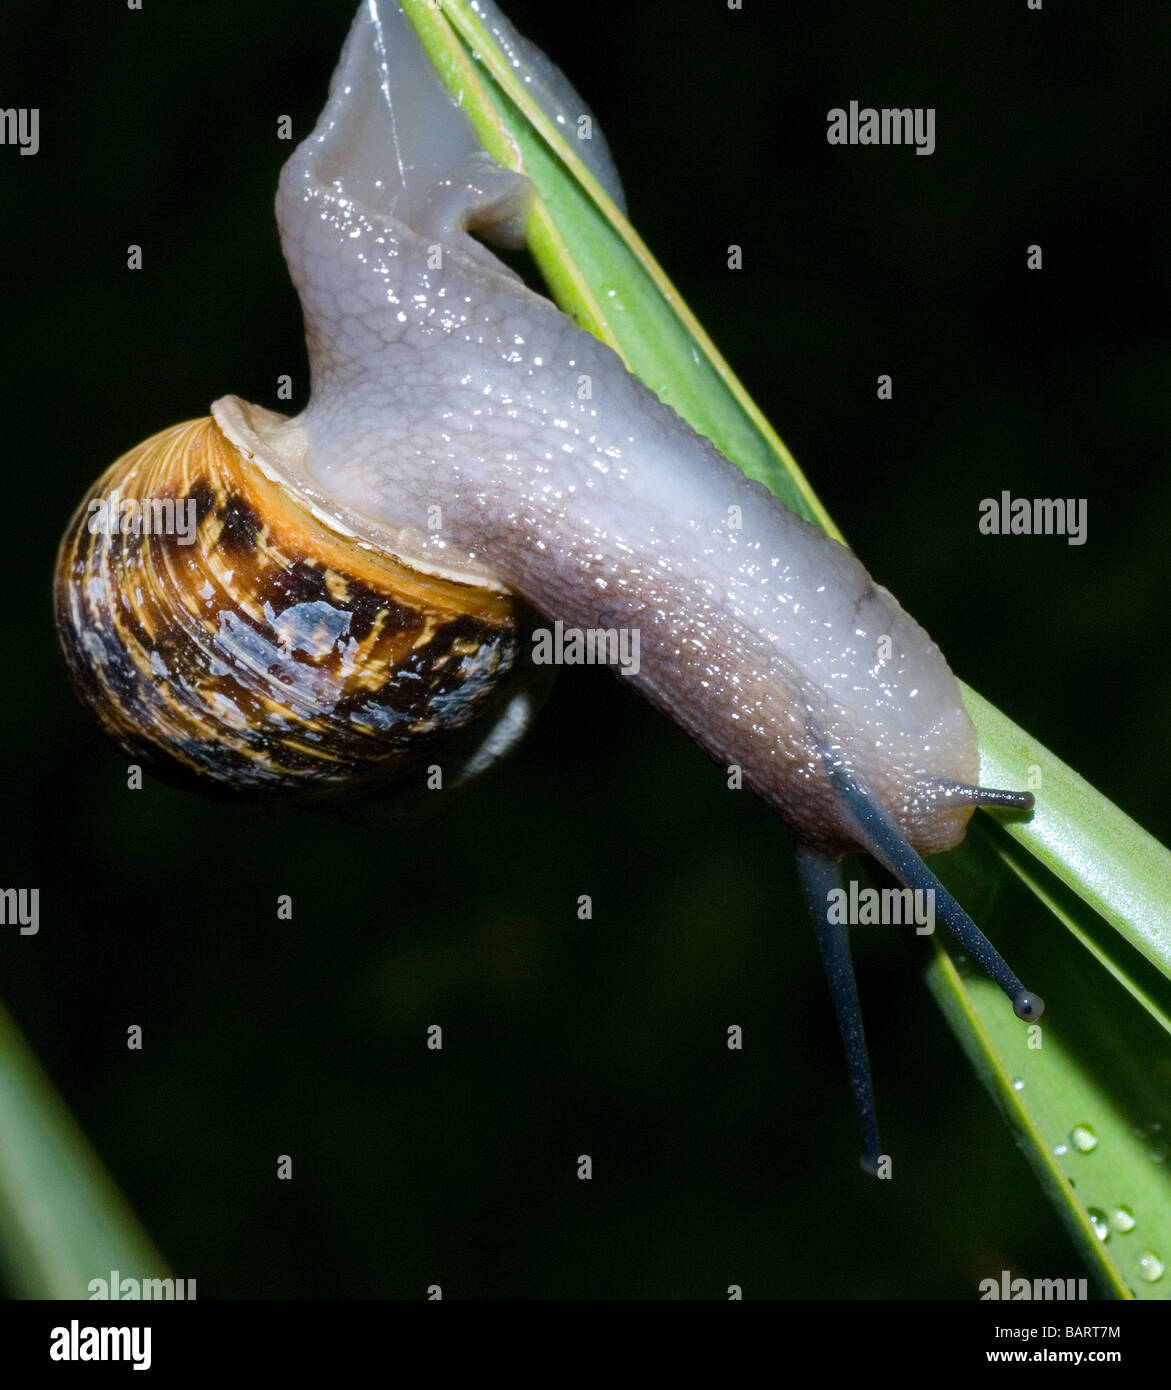 Garden snail on Yucca plant Stock Photo